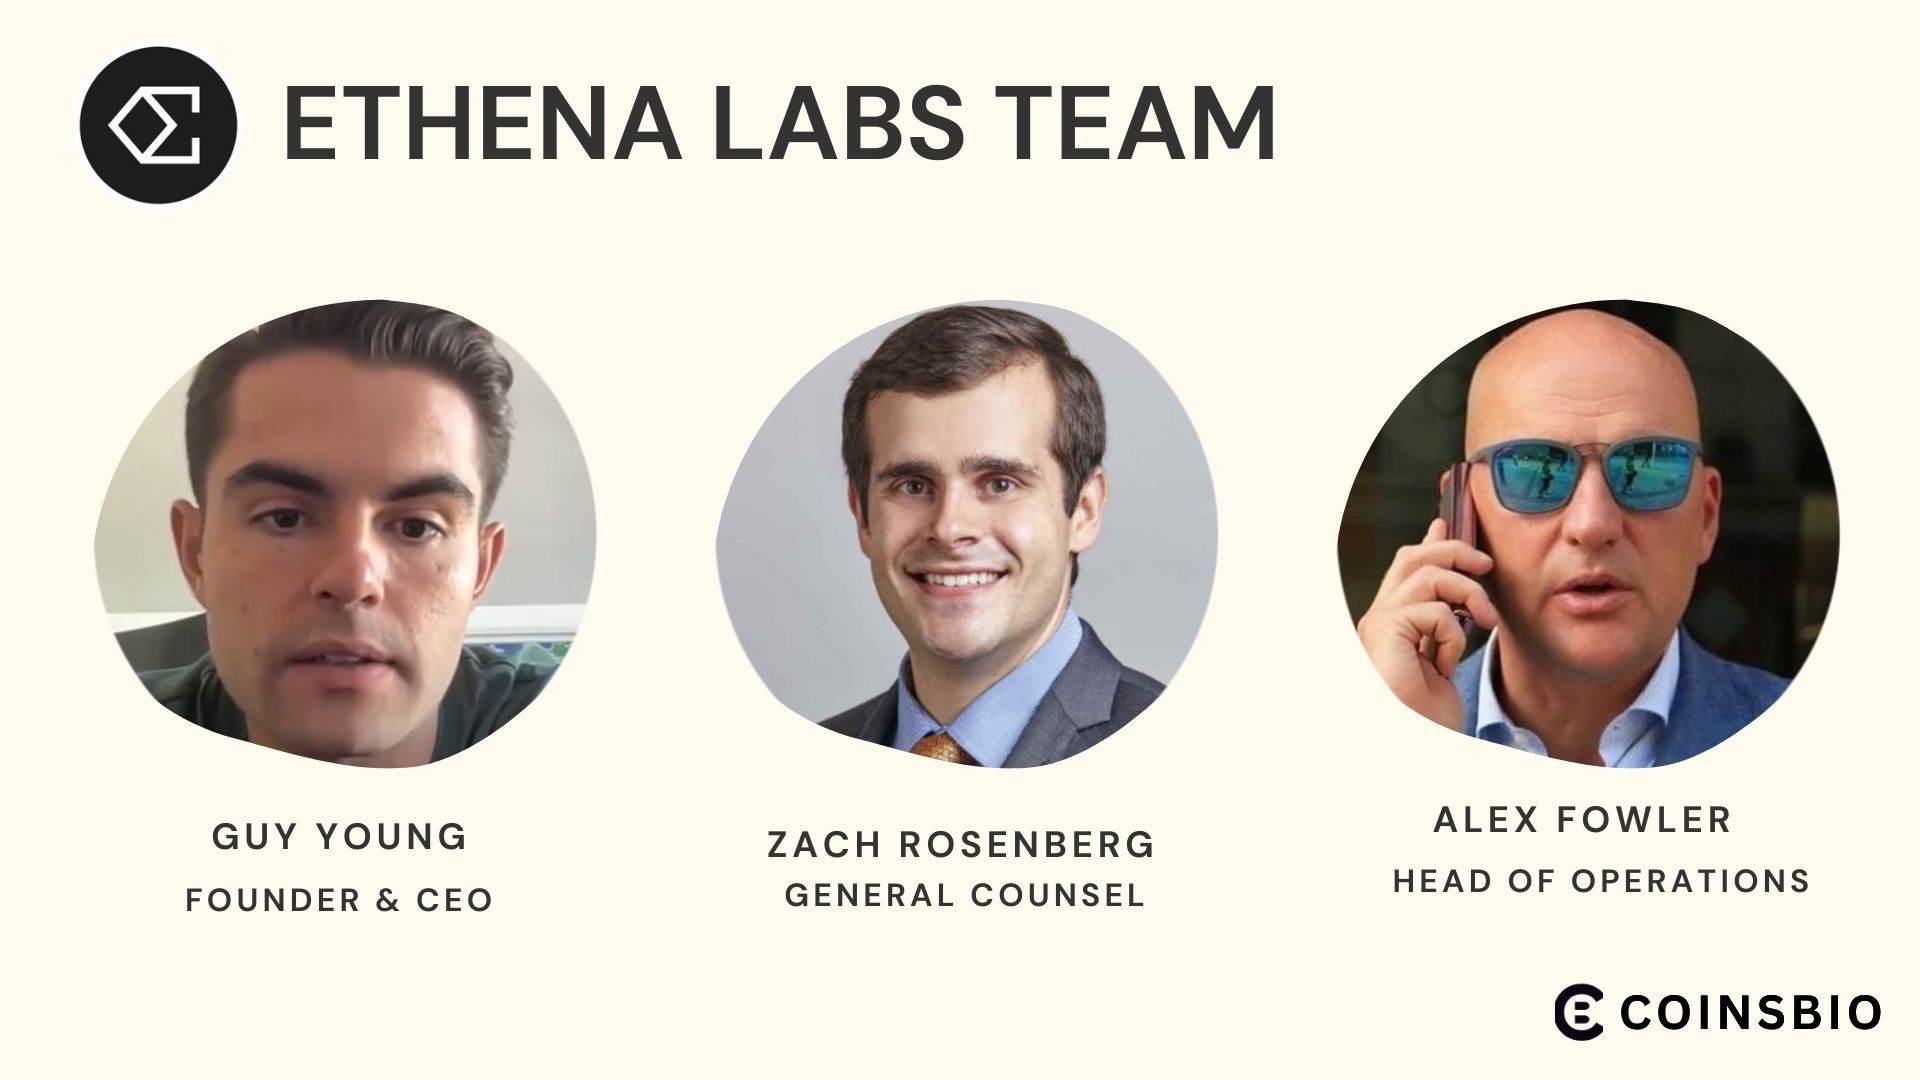 Ethena labs Team members profile images